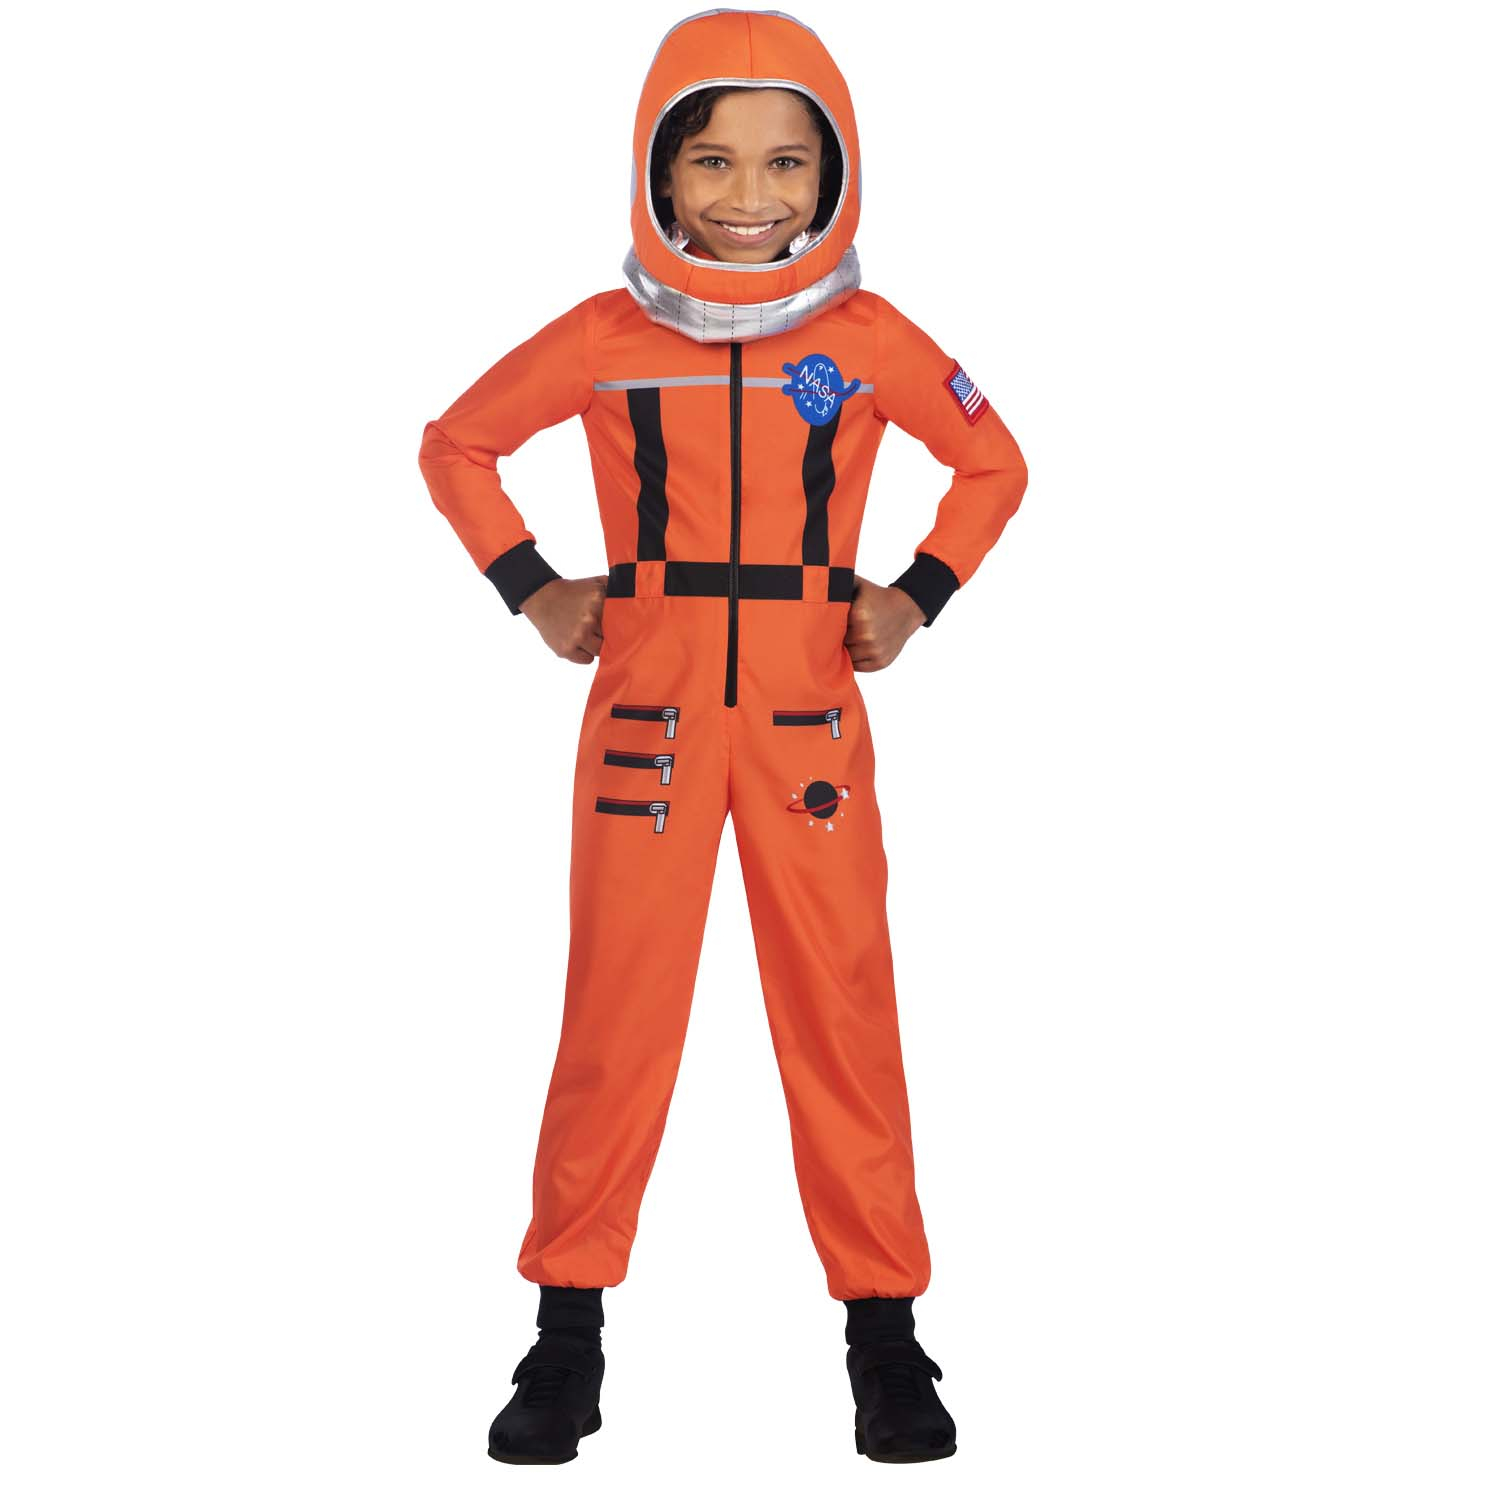 Space Suit Orange Costume - Age 8-10 Years - 1 PC : Amscan International